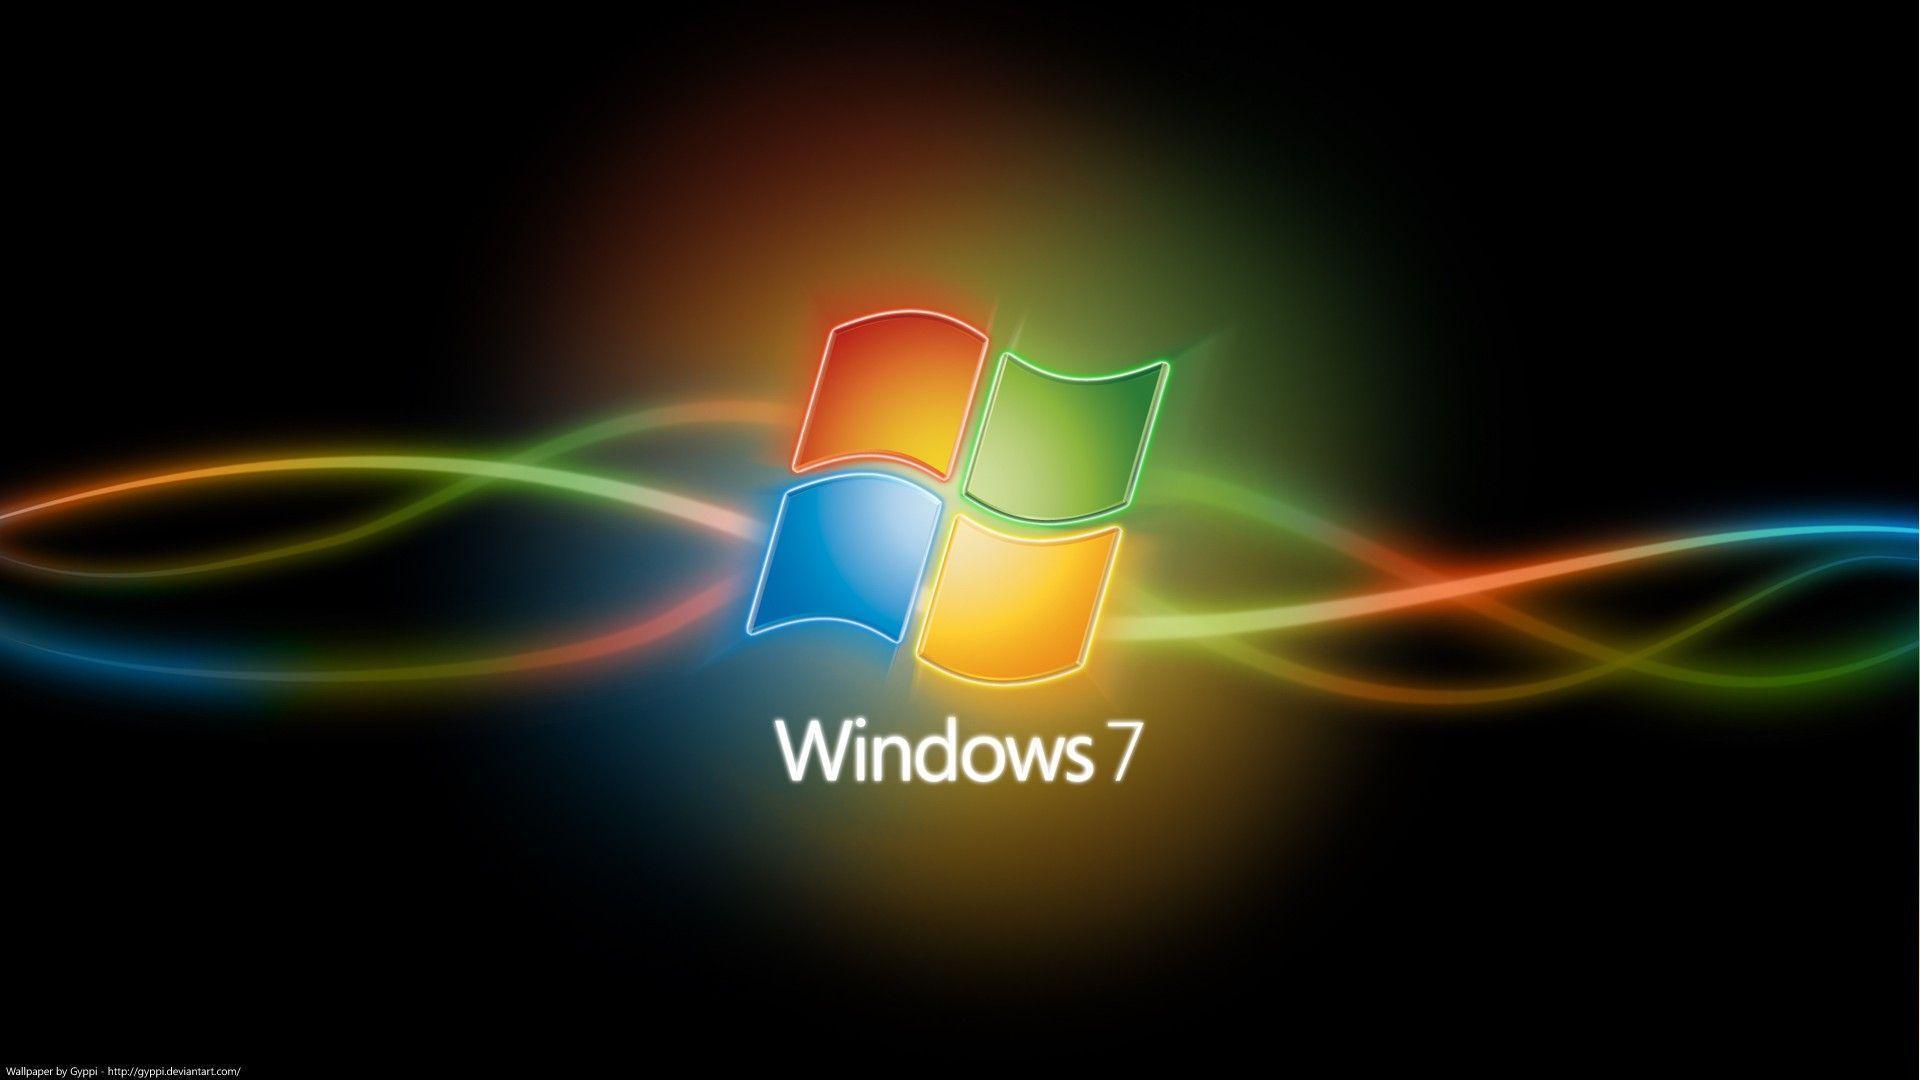 The Image of Windows 7 Logos 1920x1080 HD Wallpaper